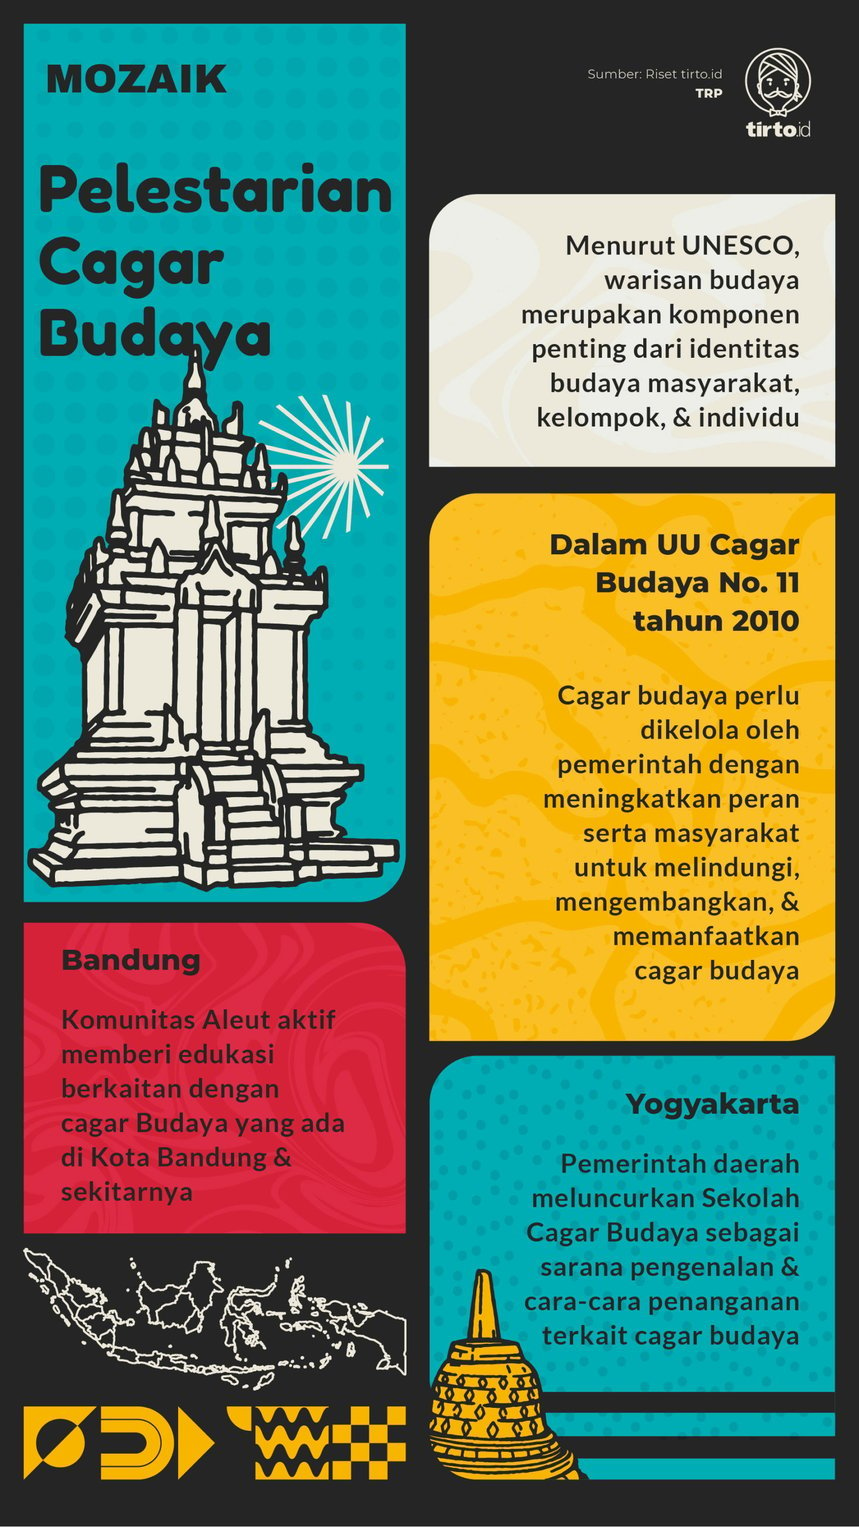 Infografik Mozaik Pelestarian Cagar Budaya